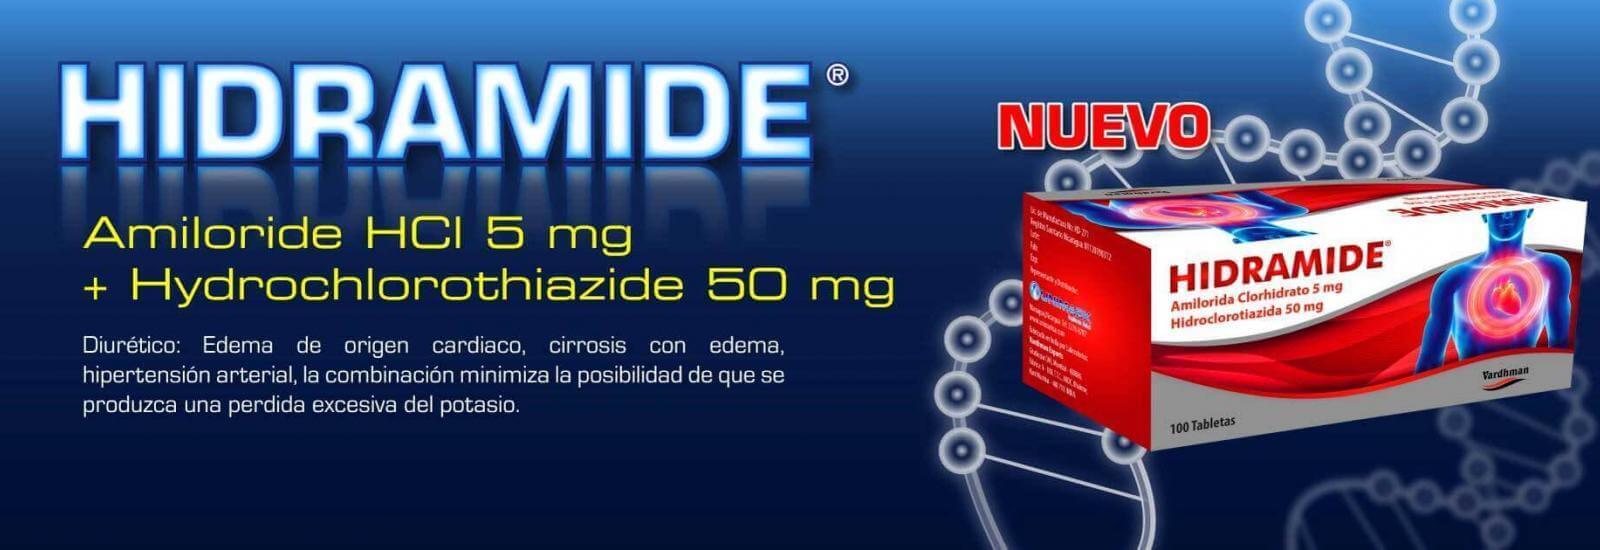 Hidramide